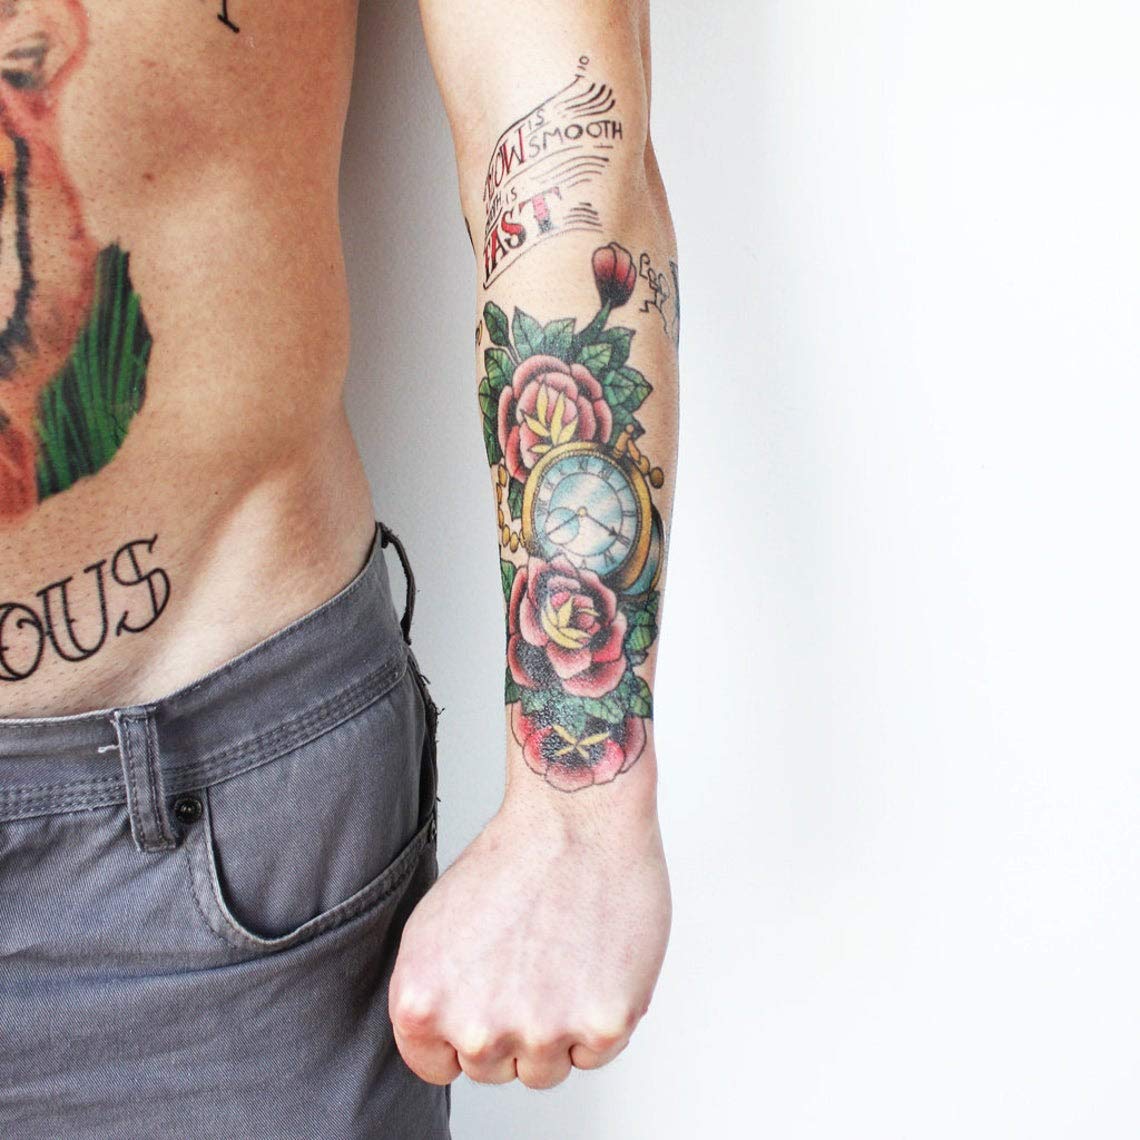 conor mcgregor tattoos